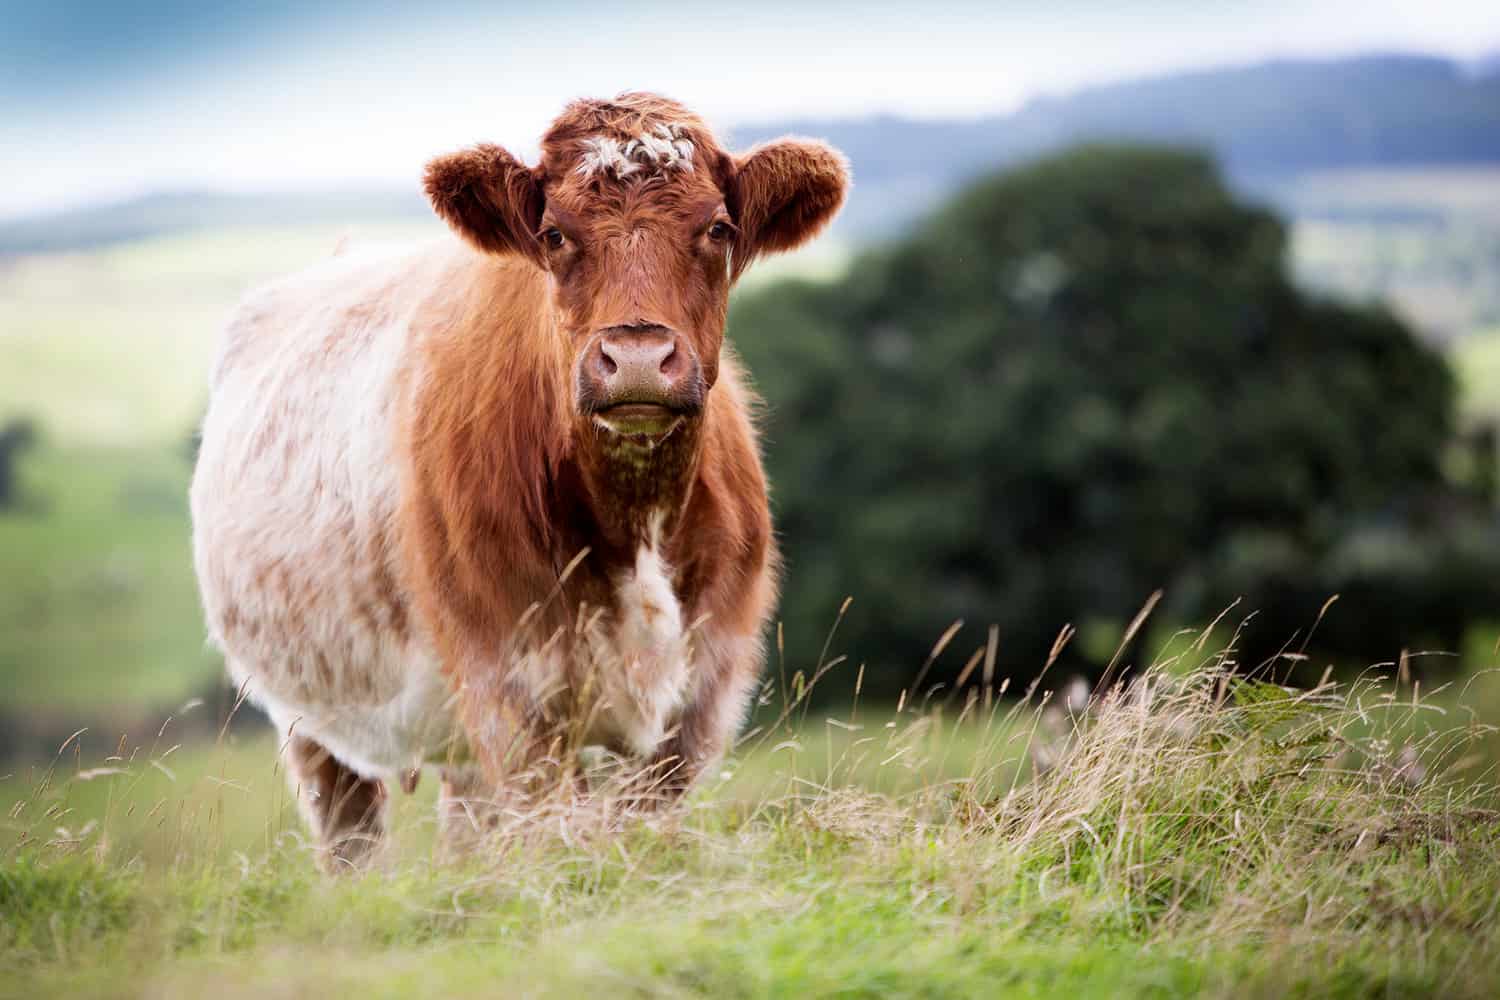 Shorthorn cow